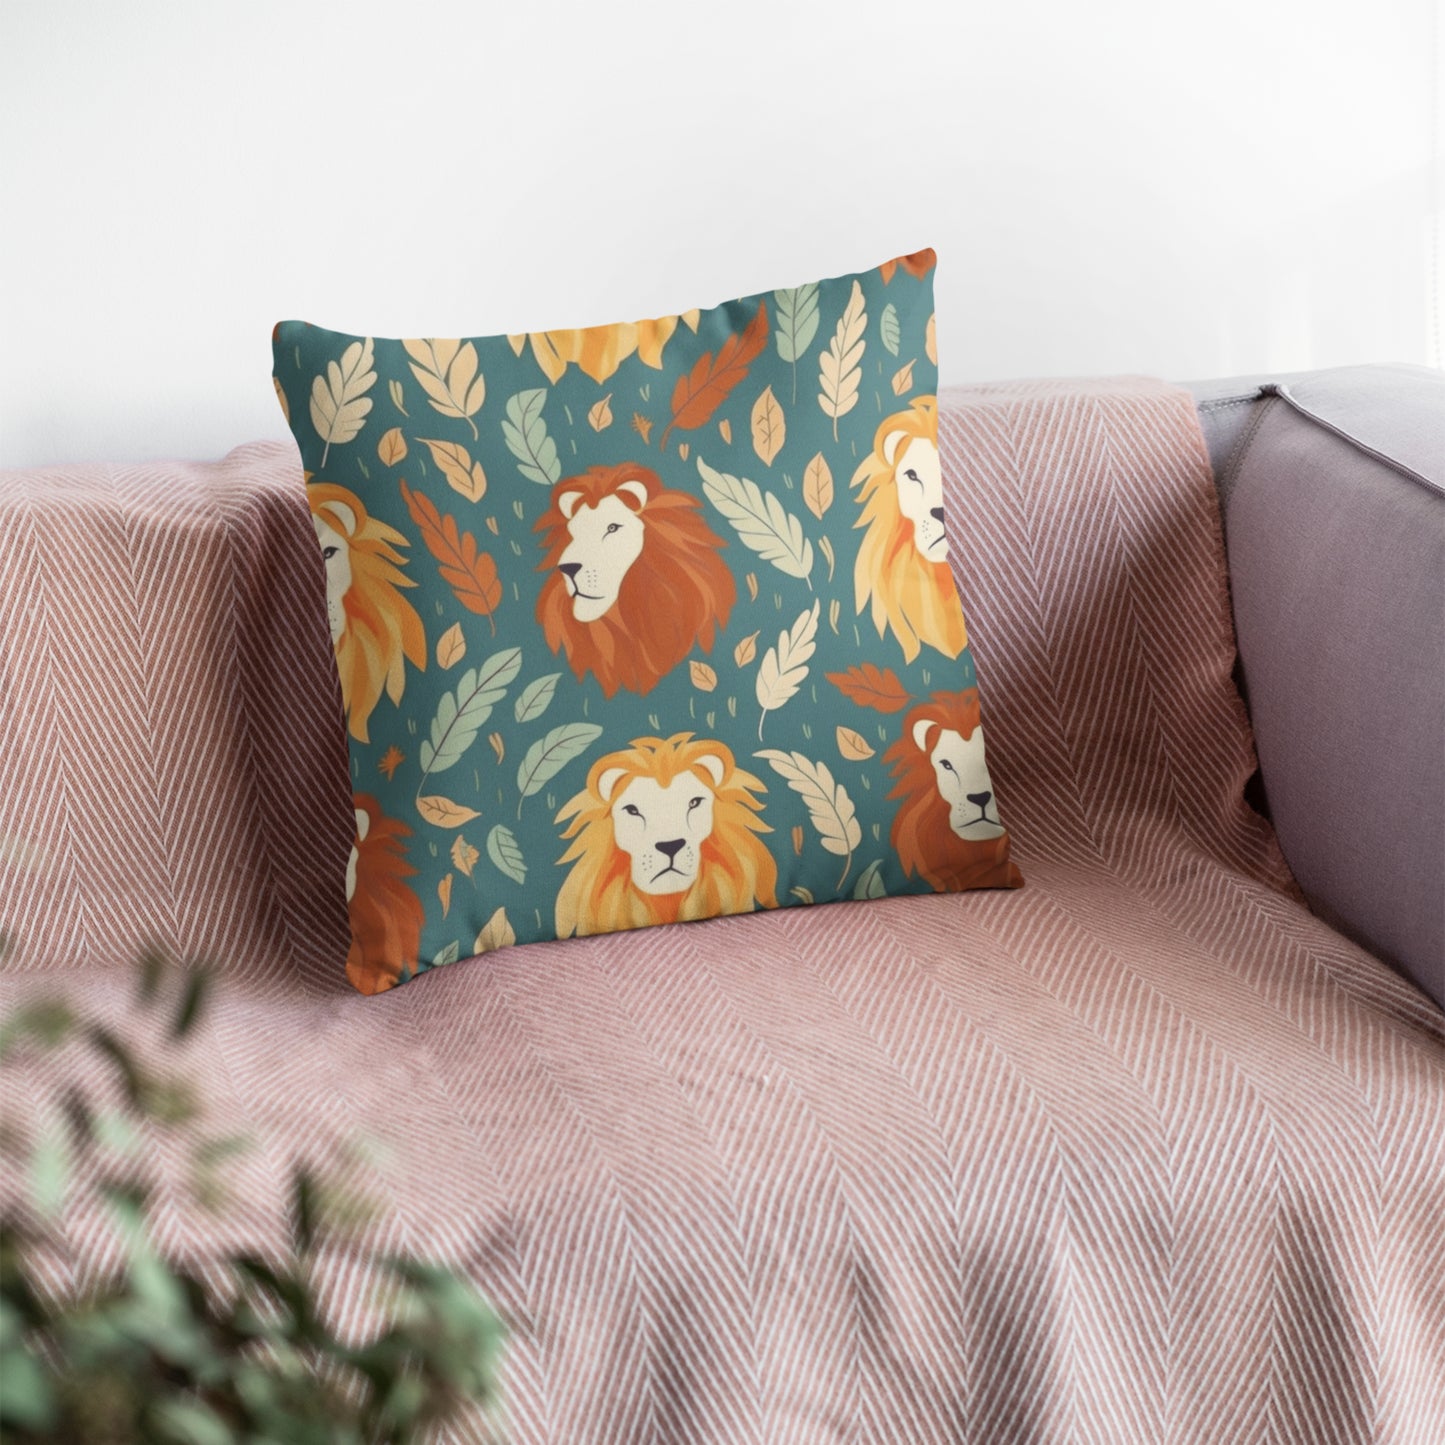 Cute Lion Decorative Cushion Design